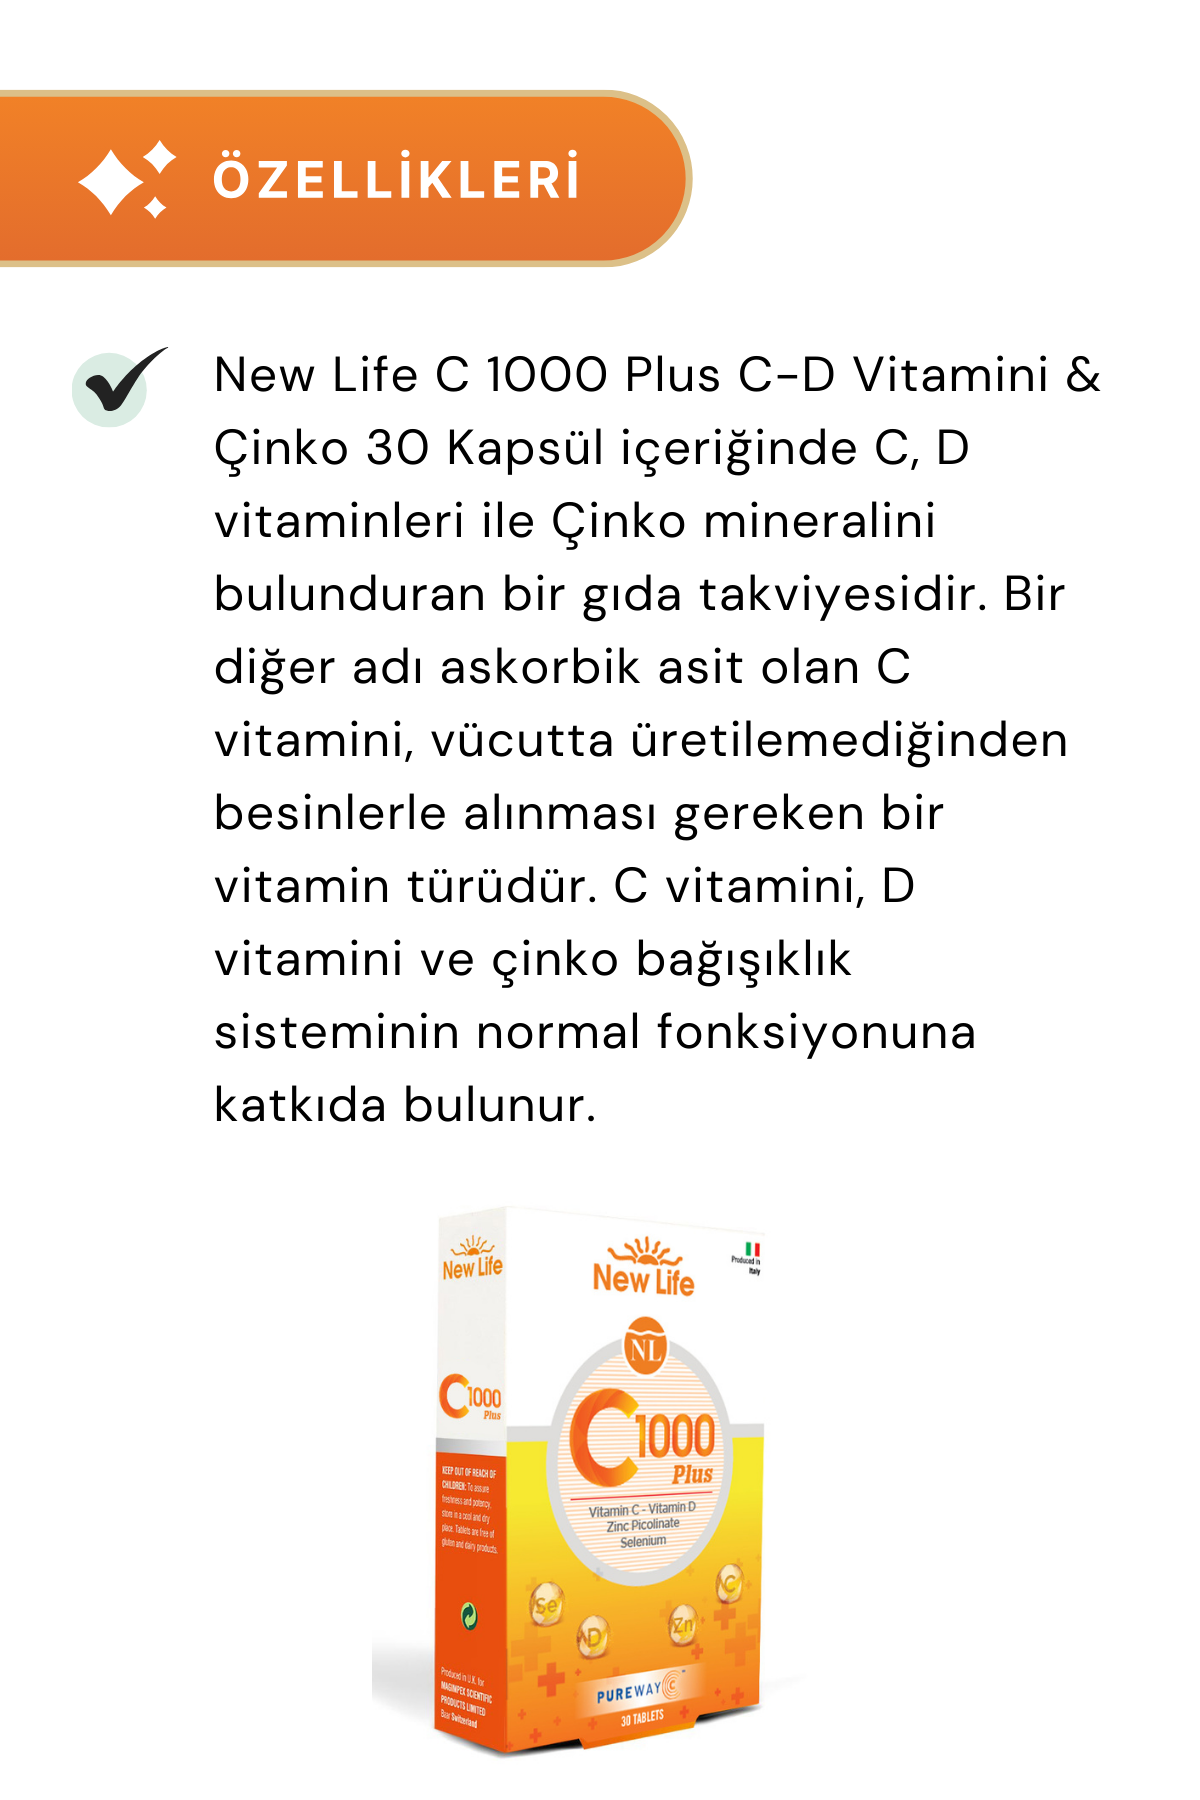 New Life C-1000 Plus C-D Vitamini & Çinko 30 Kapsül 3'lü Paket